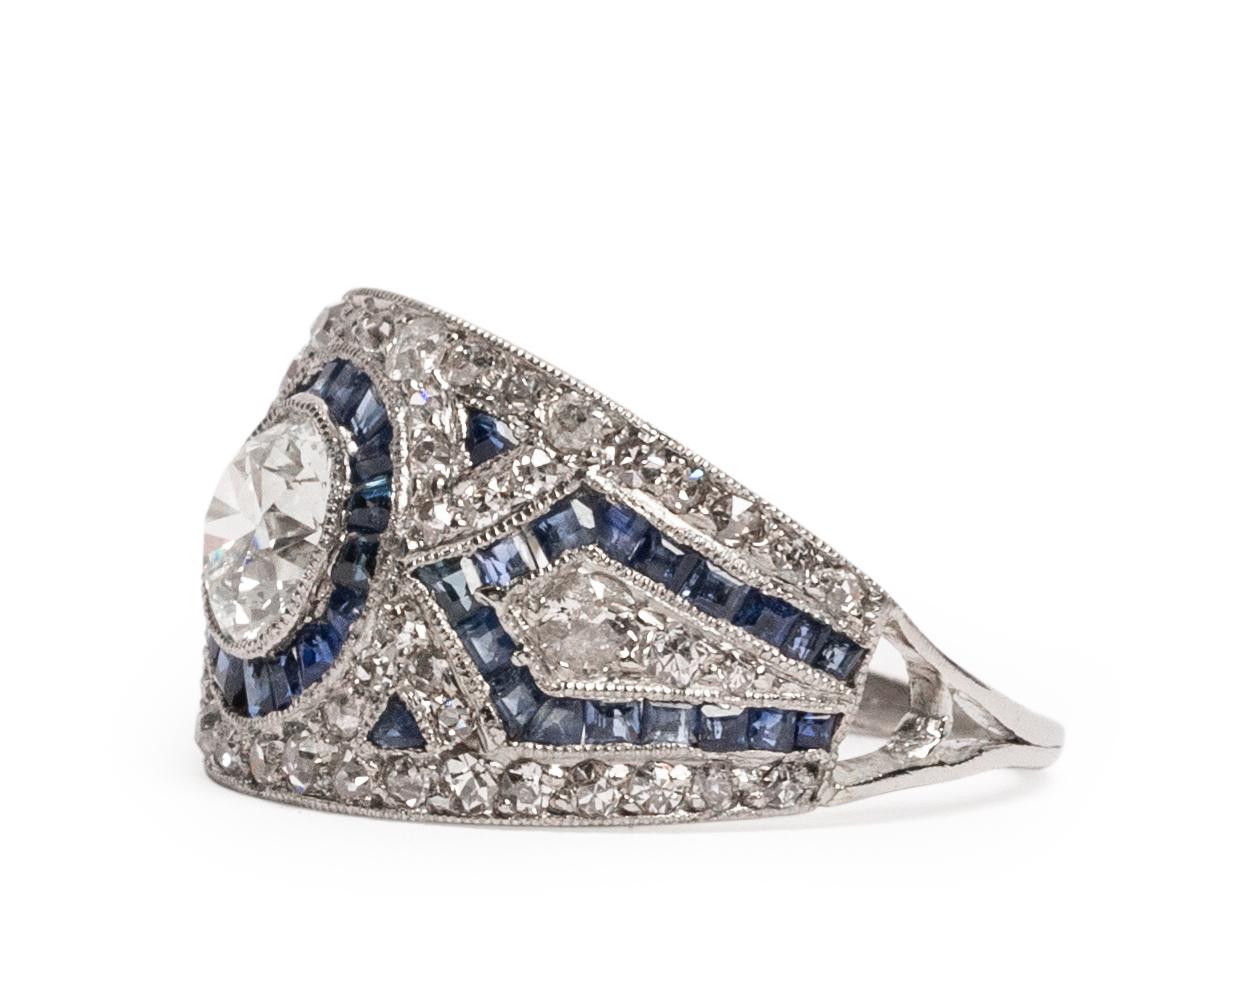 Old European Cut Art Deco Spectacular Pave Diamond and Blue Sapphire Platinum Ring, circa 1920s